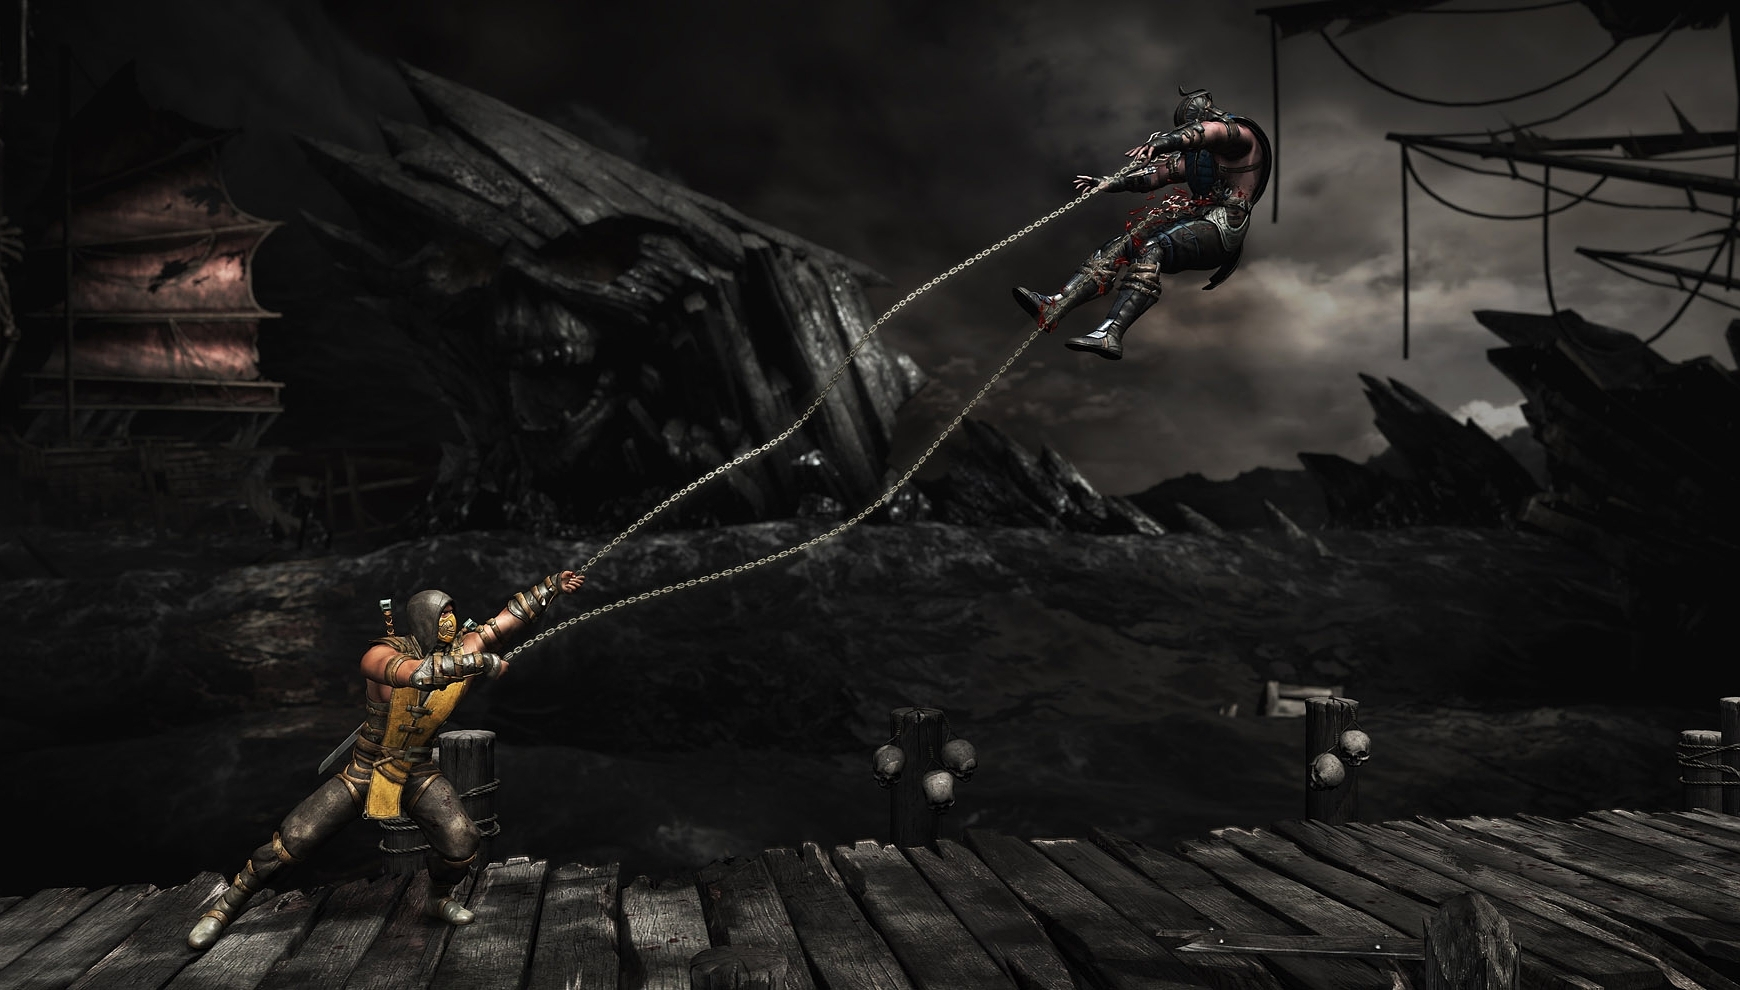 Mortal Kombat X. Kombat Pack [PC, Цифровая версия] (Цифровая версия) от 1С Интерес